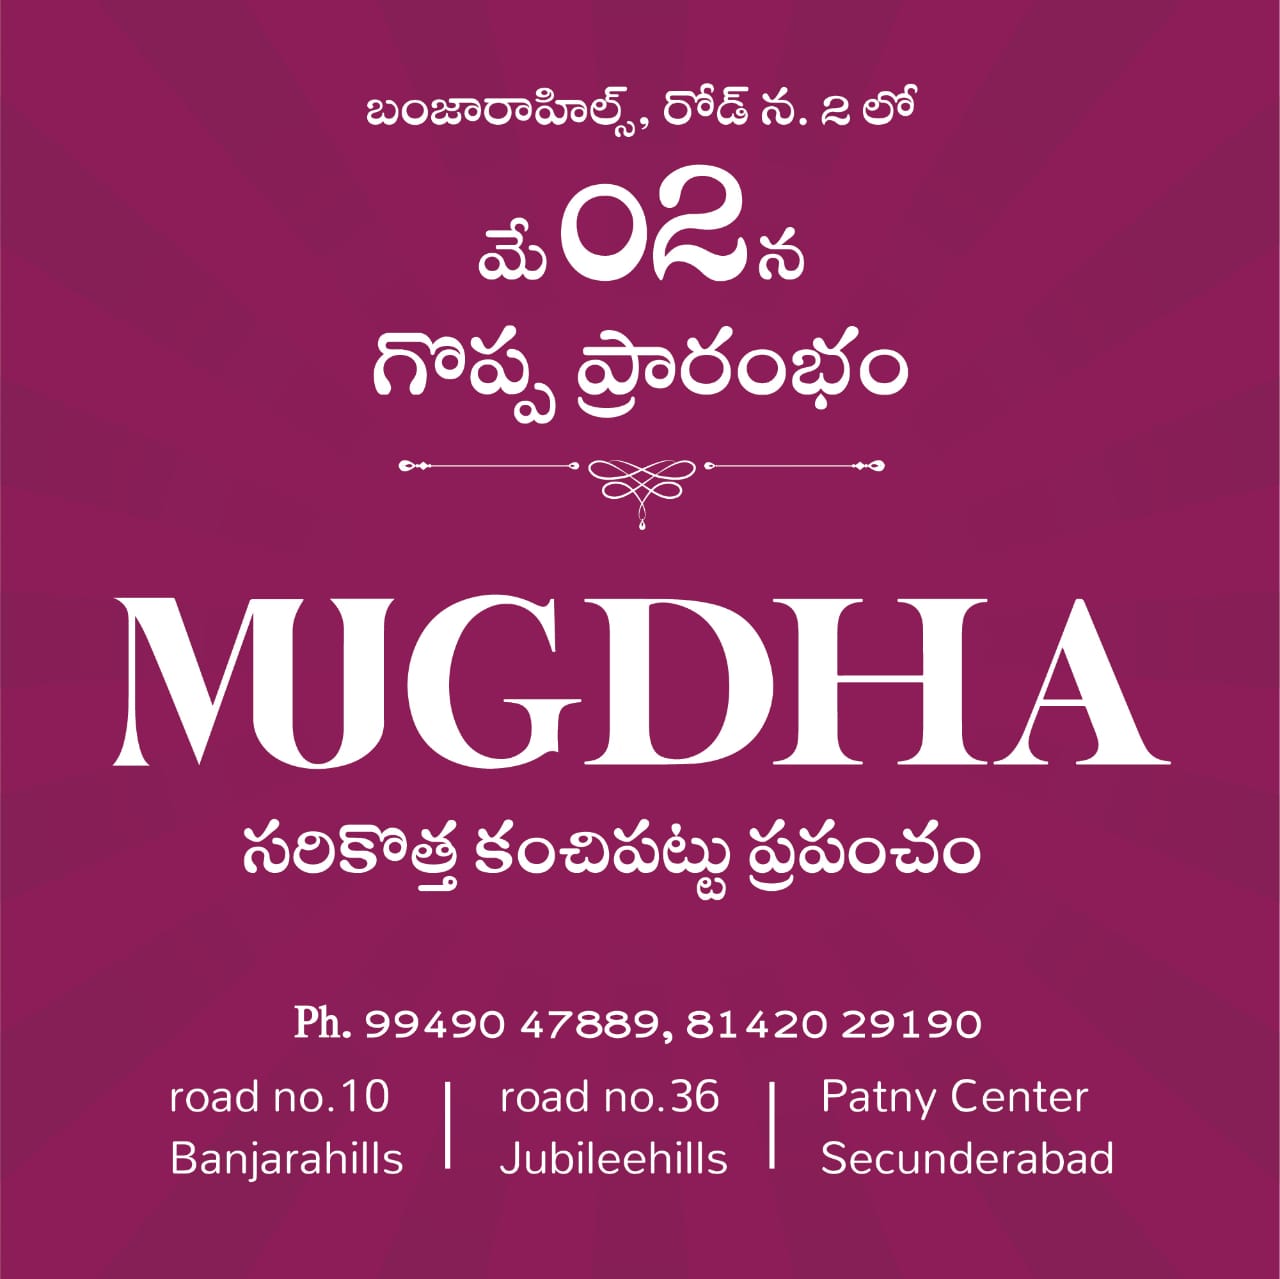 Grand Opening Of Mugdha New Store In Banjara Hills, Road Number 2, Hyderabad, Telangana, India